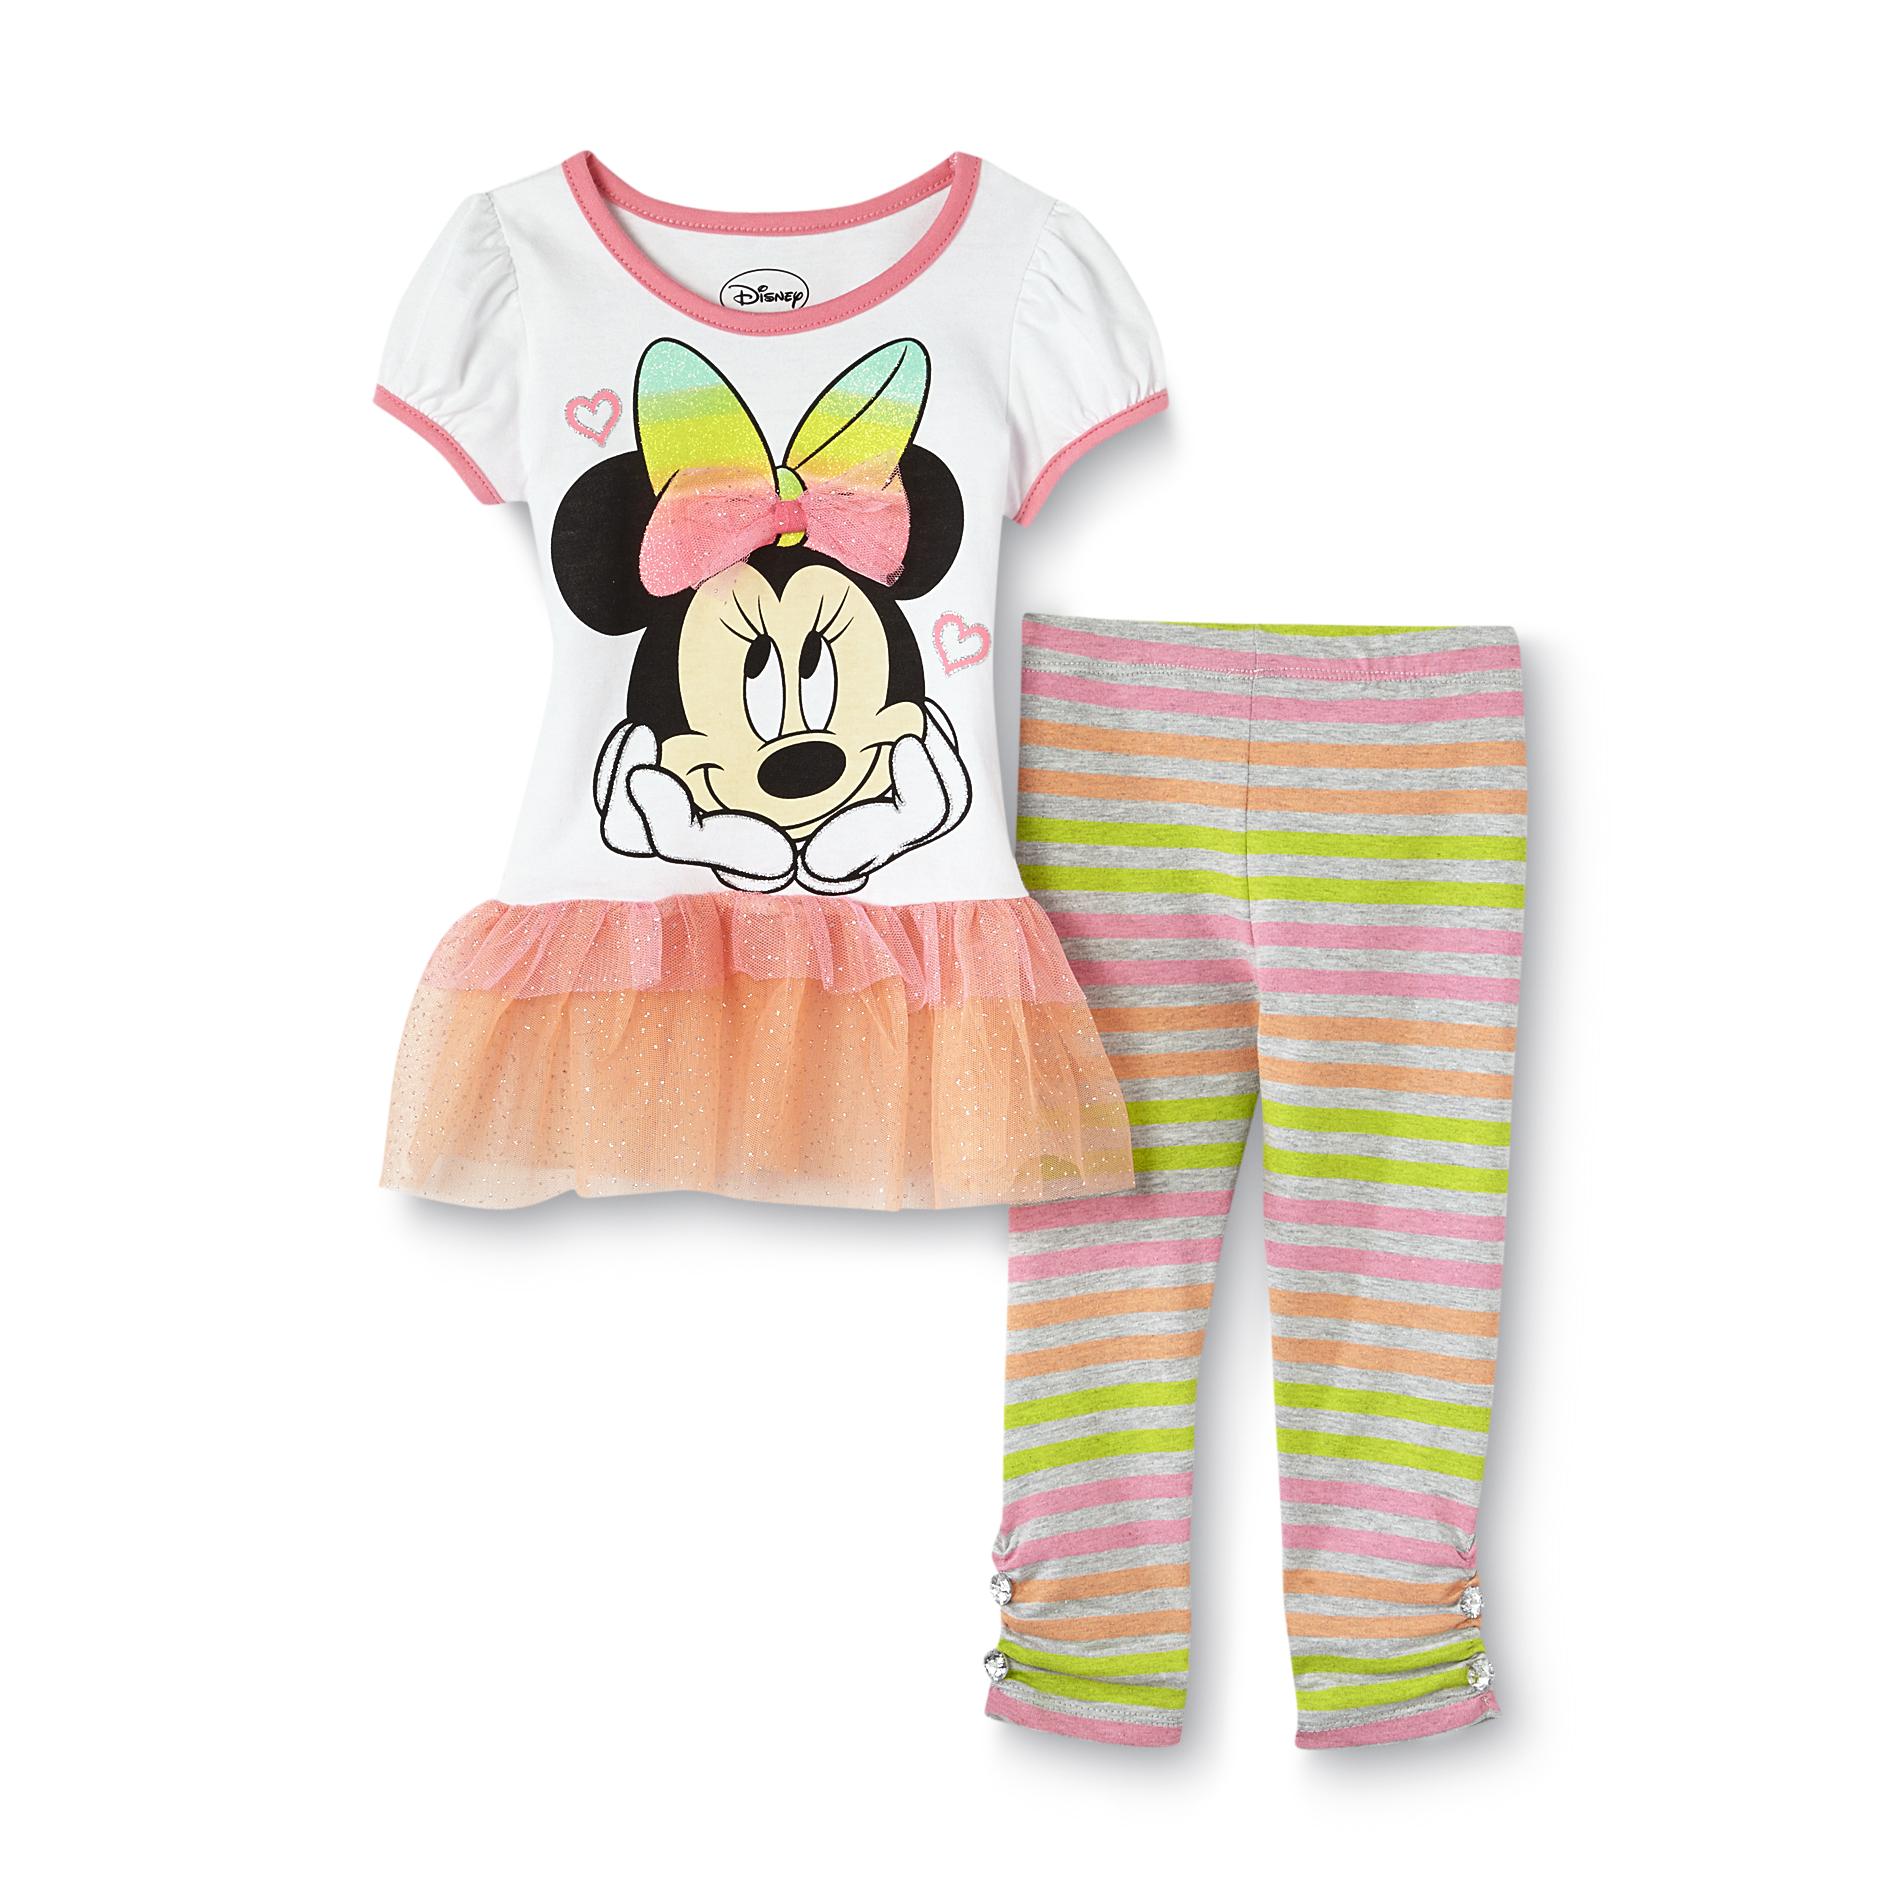 Disney Minnie Mouse Infant & Toddler Girl's Dress & Leggings - Neon Striped